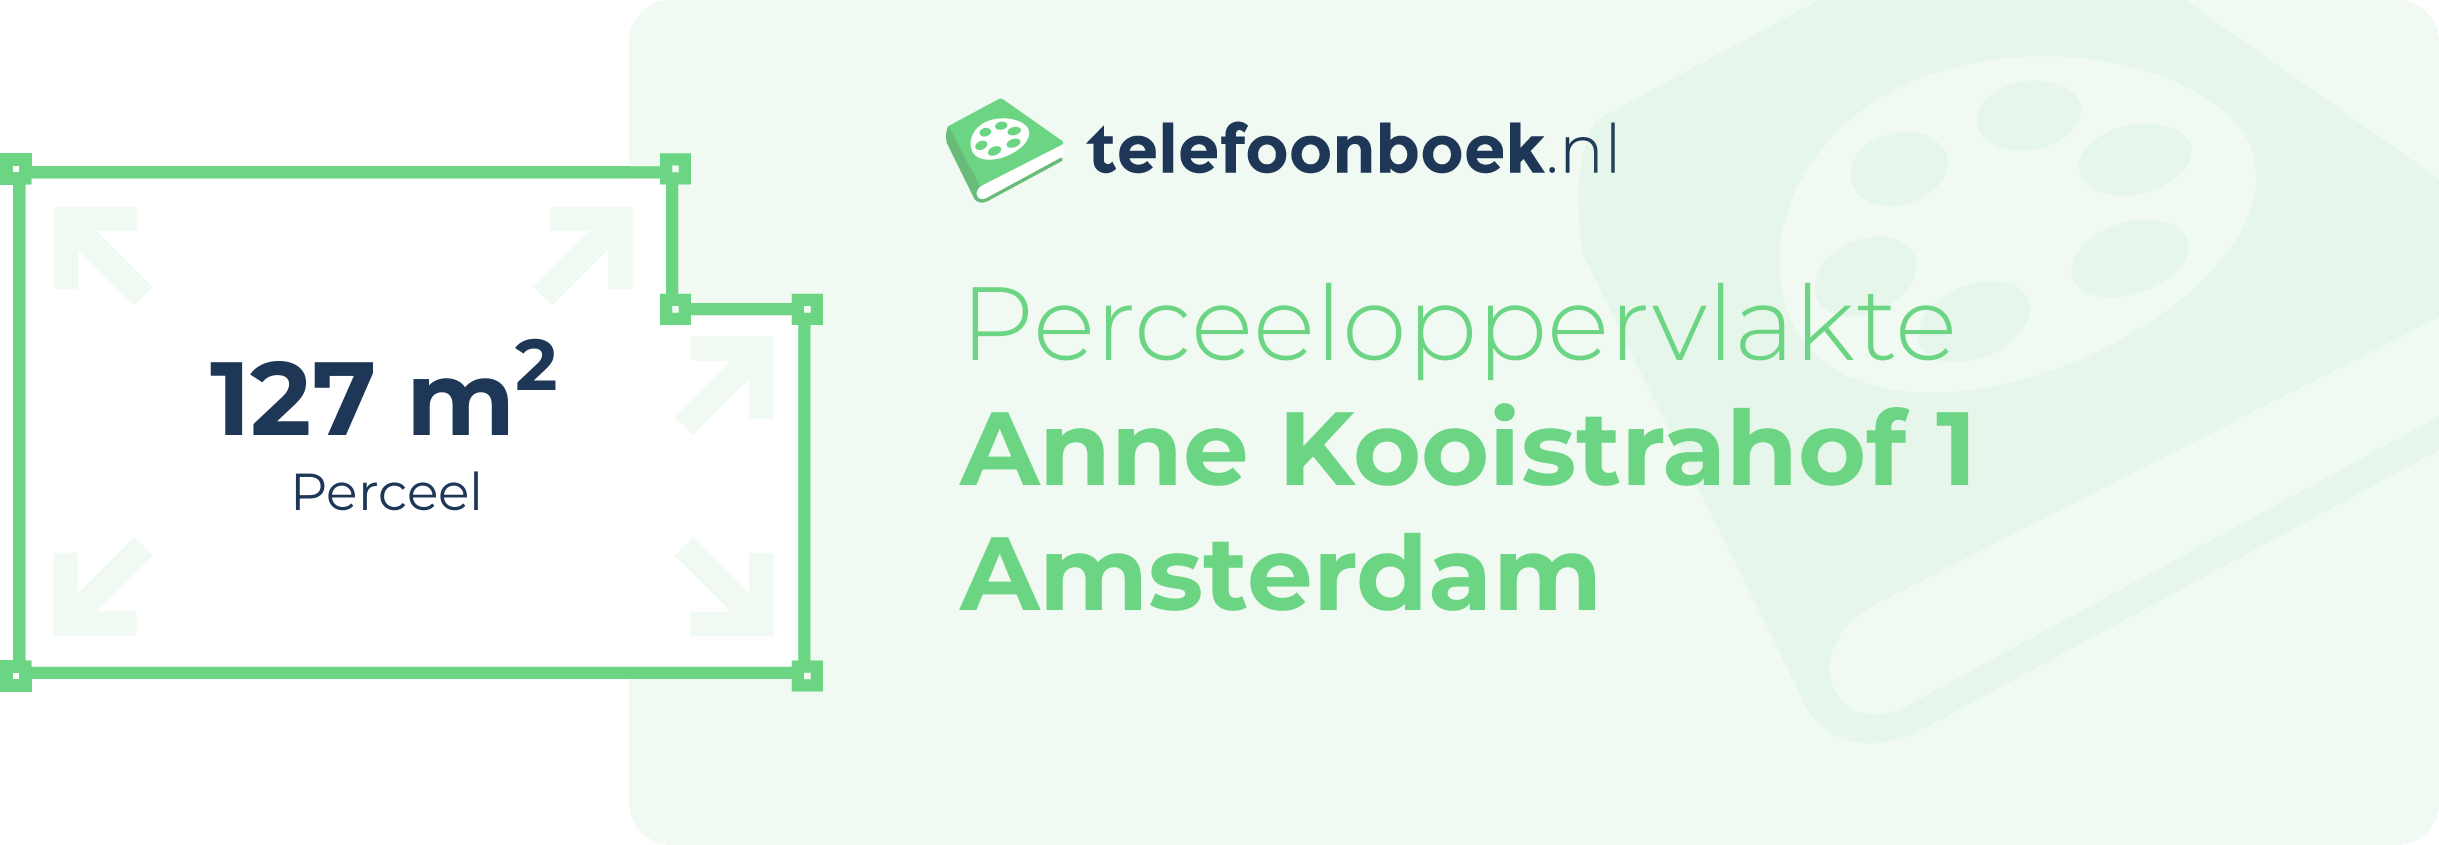 Perceeloppervlakte Anne Kooistrahof 1 Amsterdam